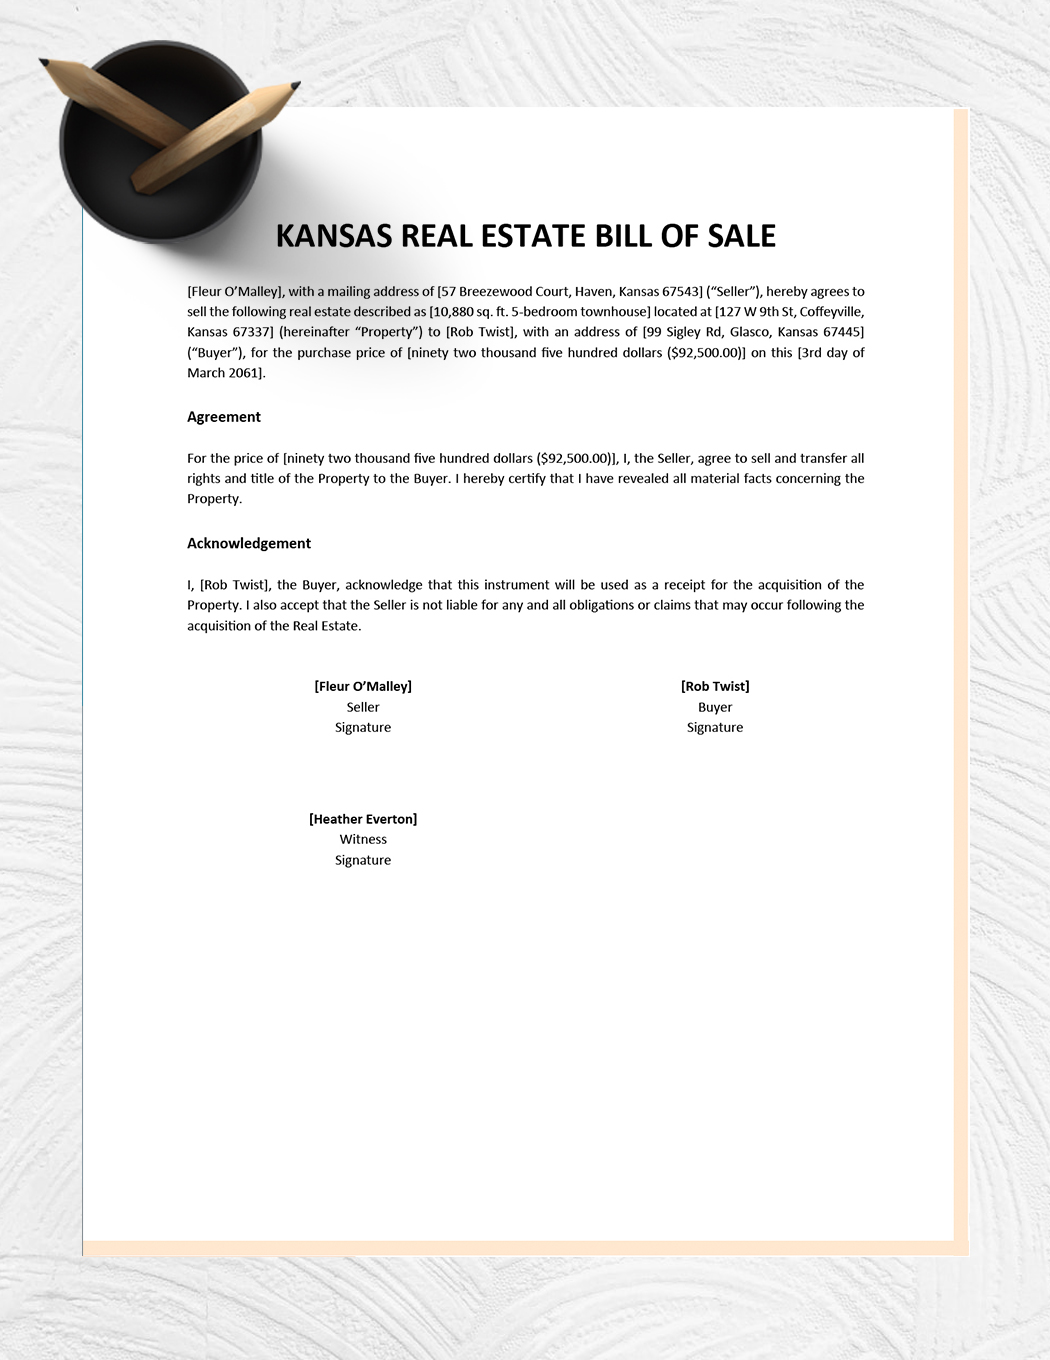 Kansas Real Estate Bill of Sale Template